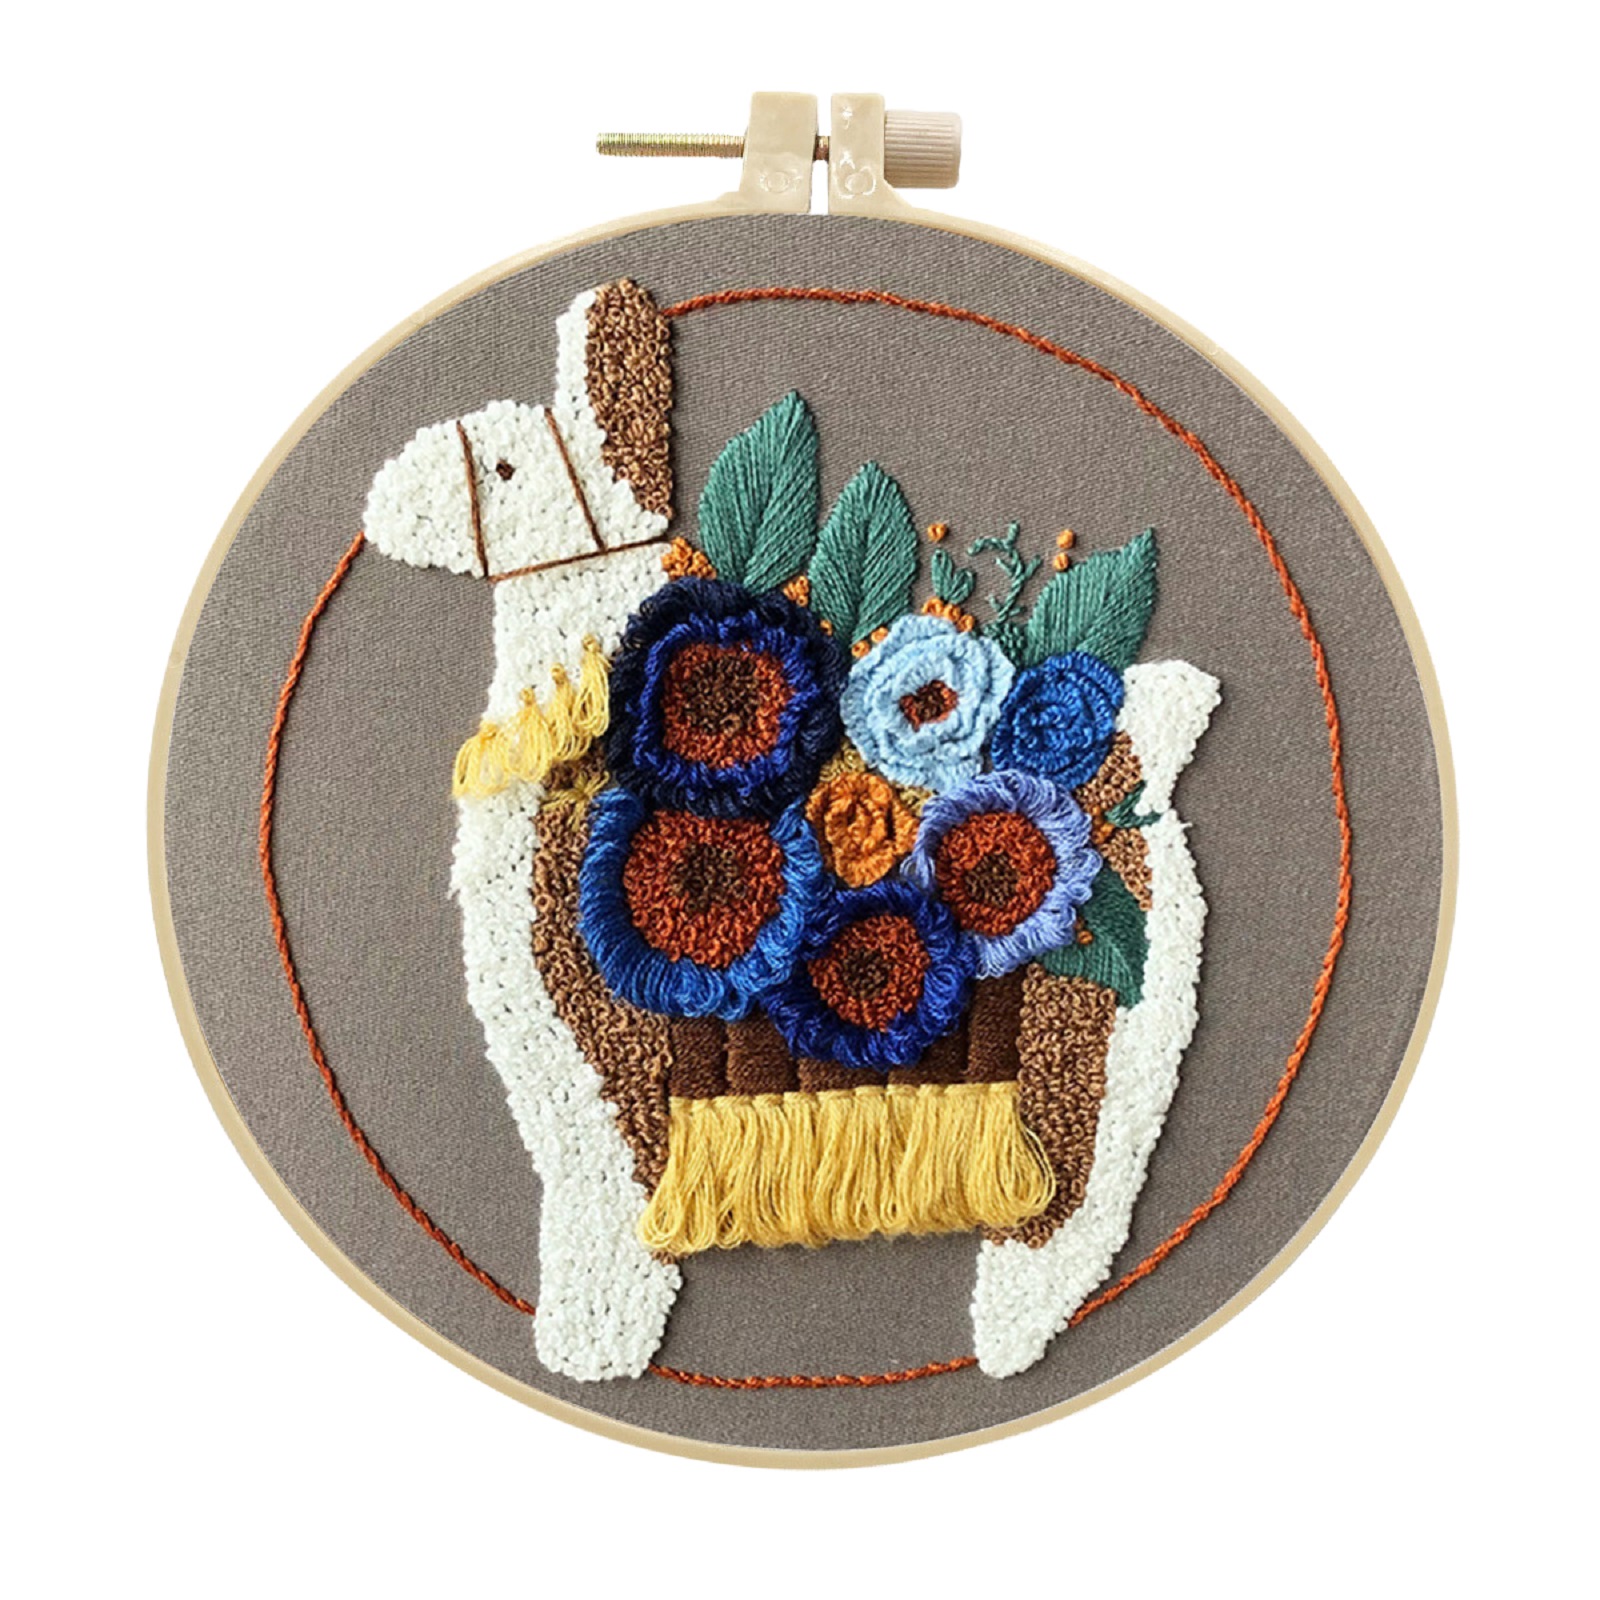 Embroidery starter kit for Adult Beginner - Cute Alpaca Pattern